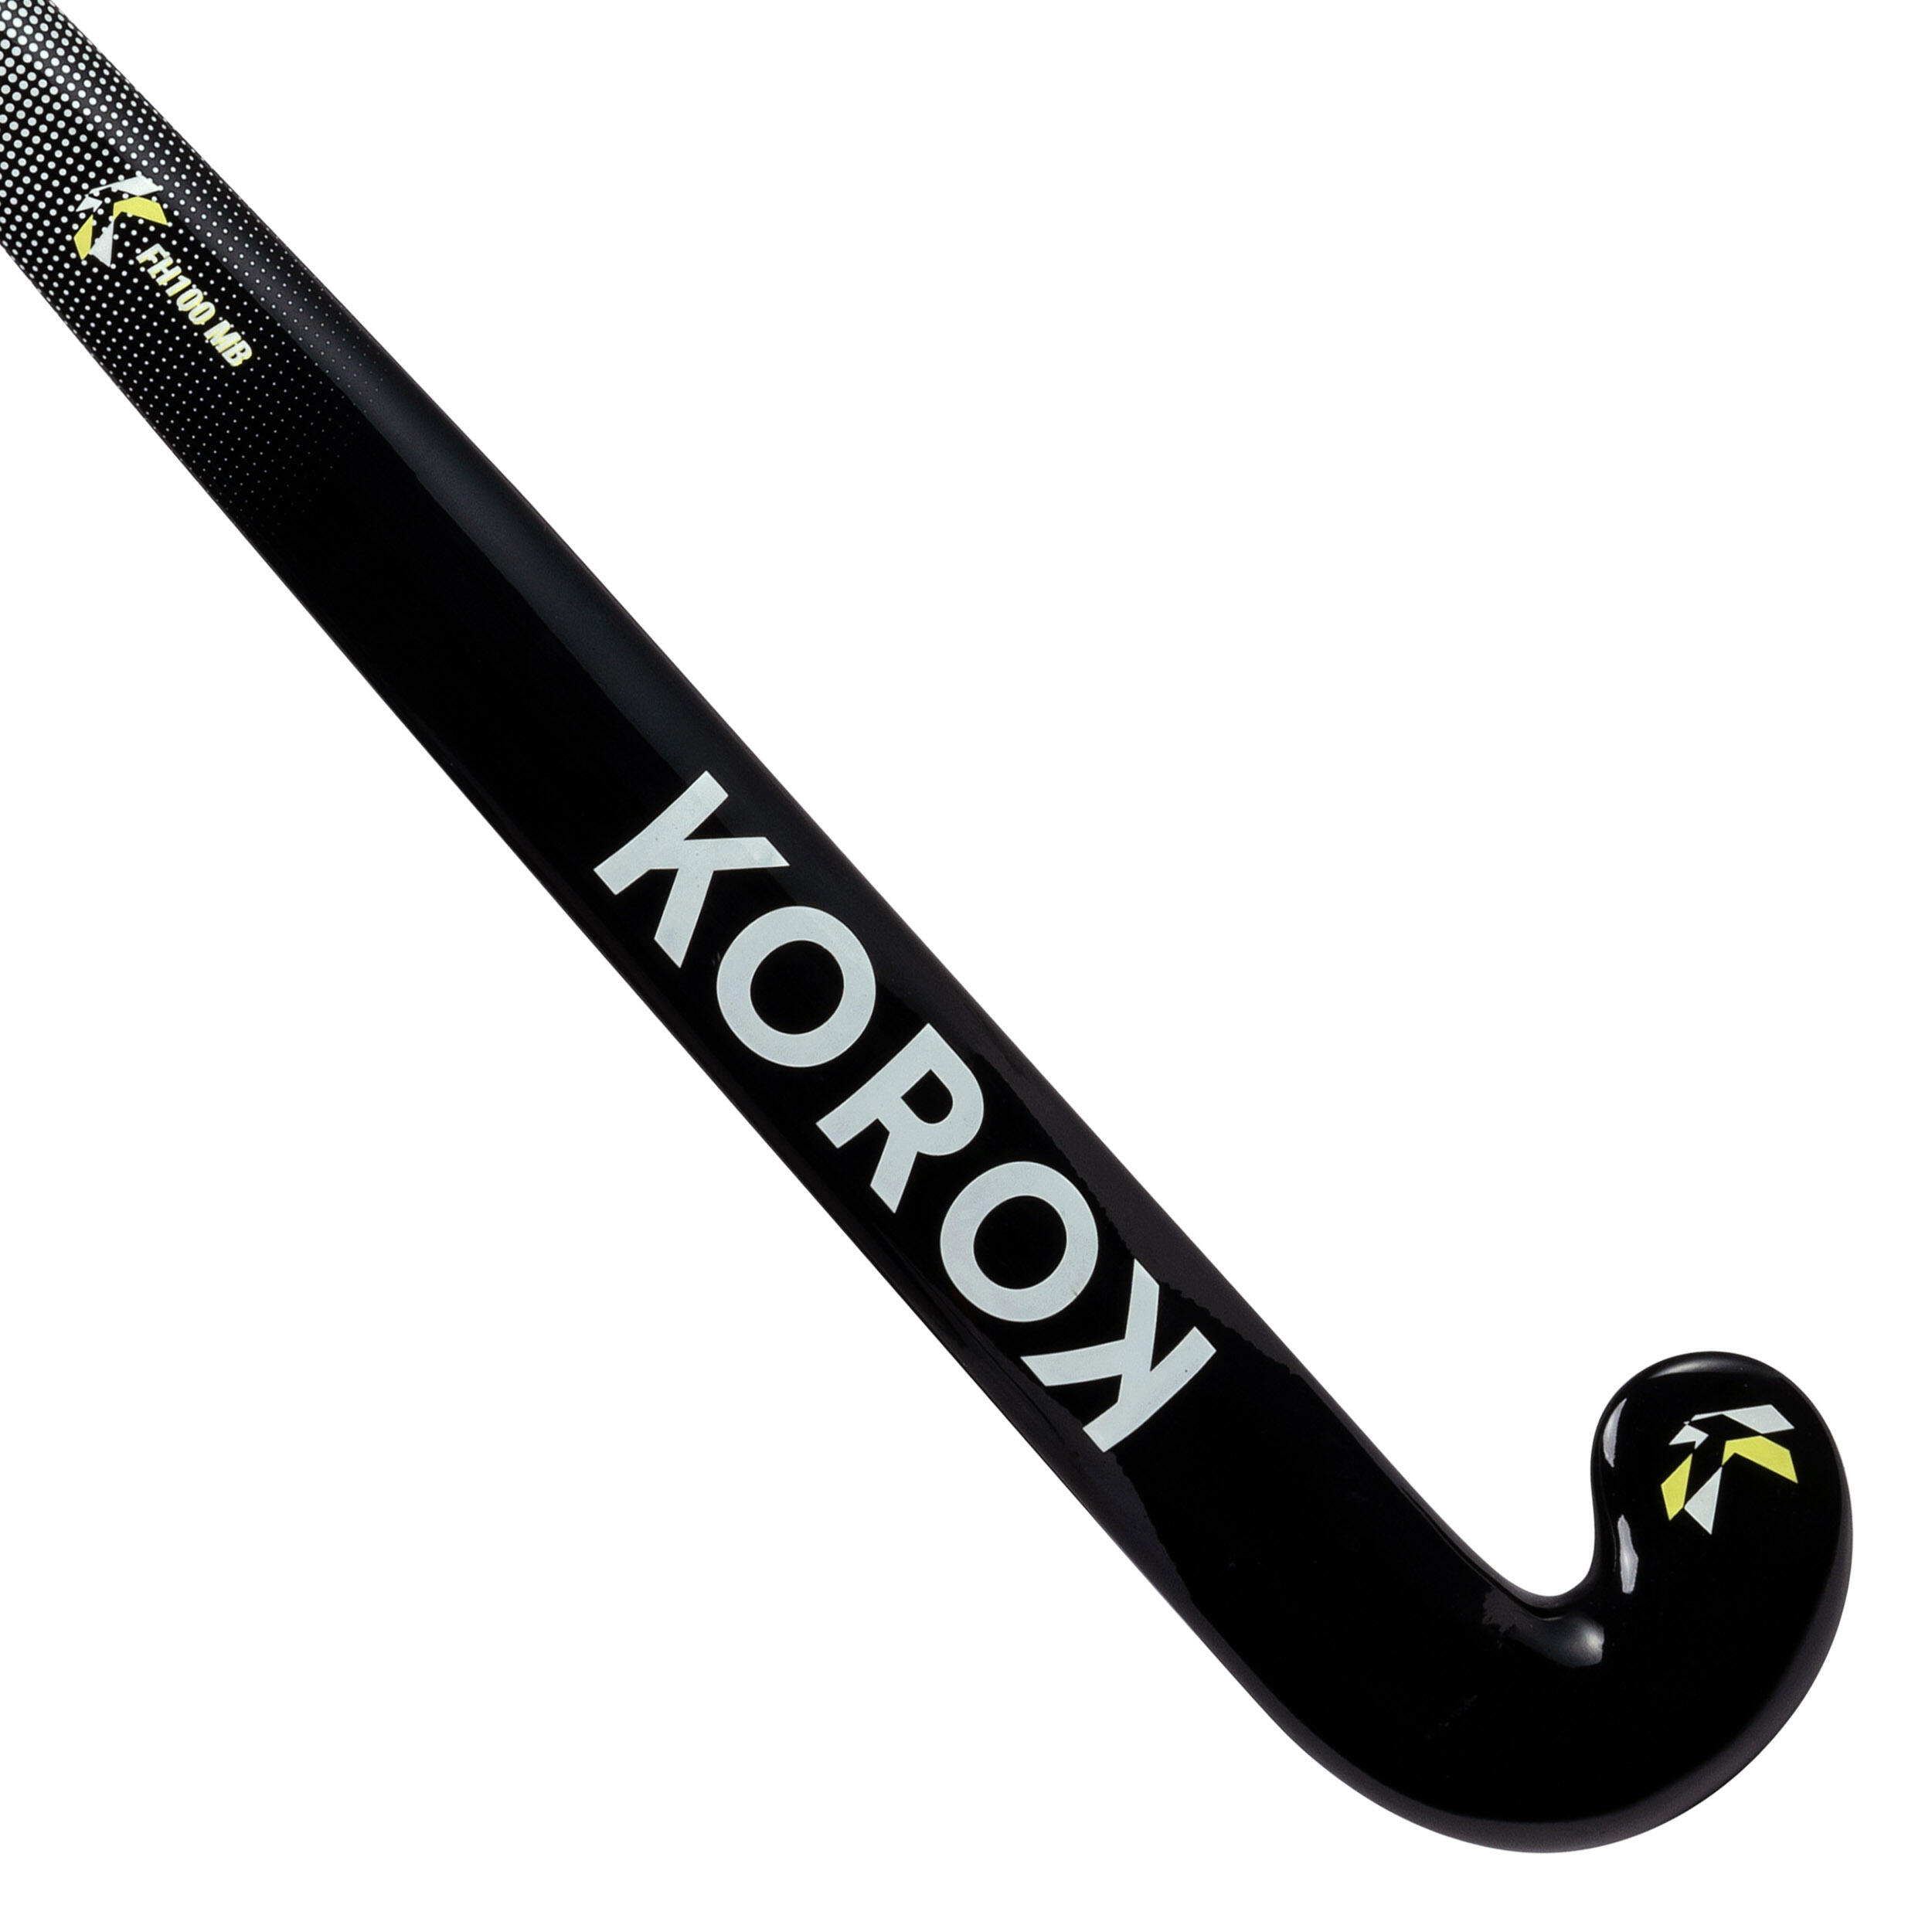 Adult Beginner Mid Bow Fibreglass Field Hockey Stick FH100 - Black/White 9/12